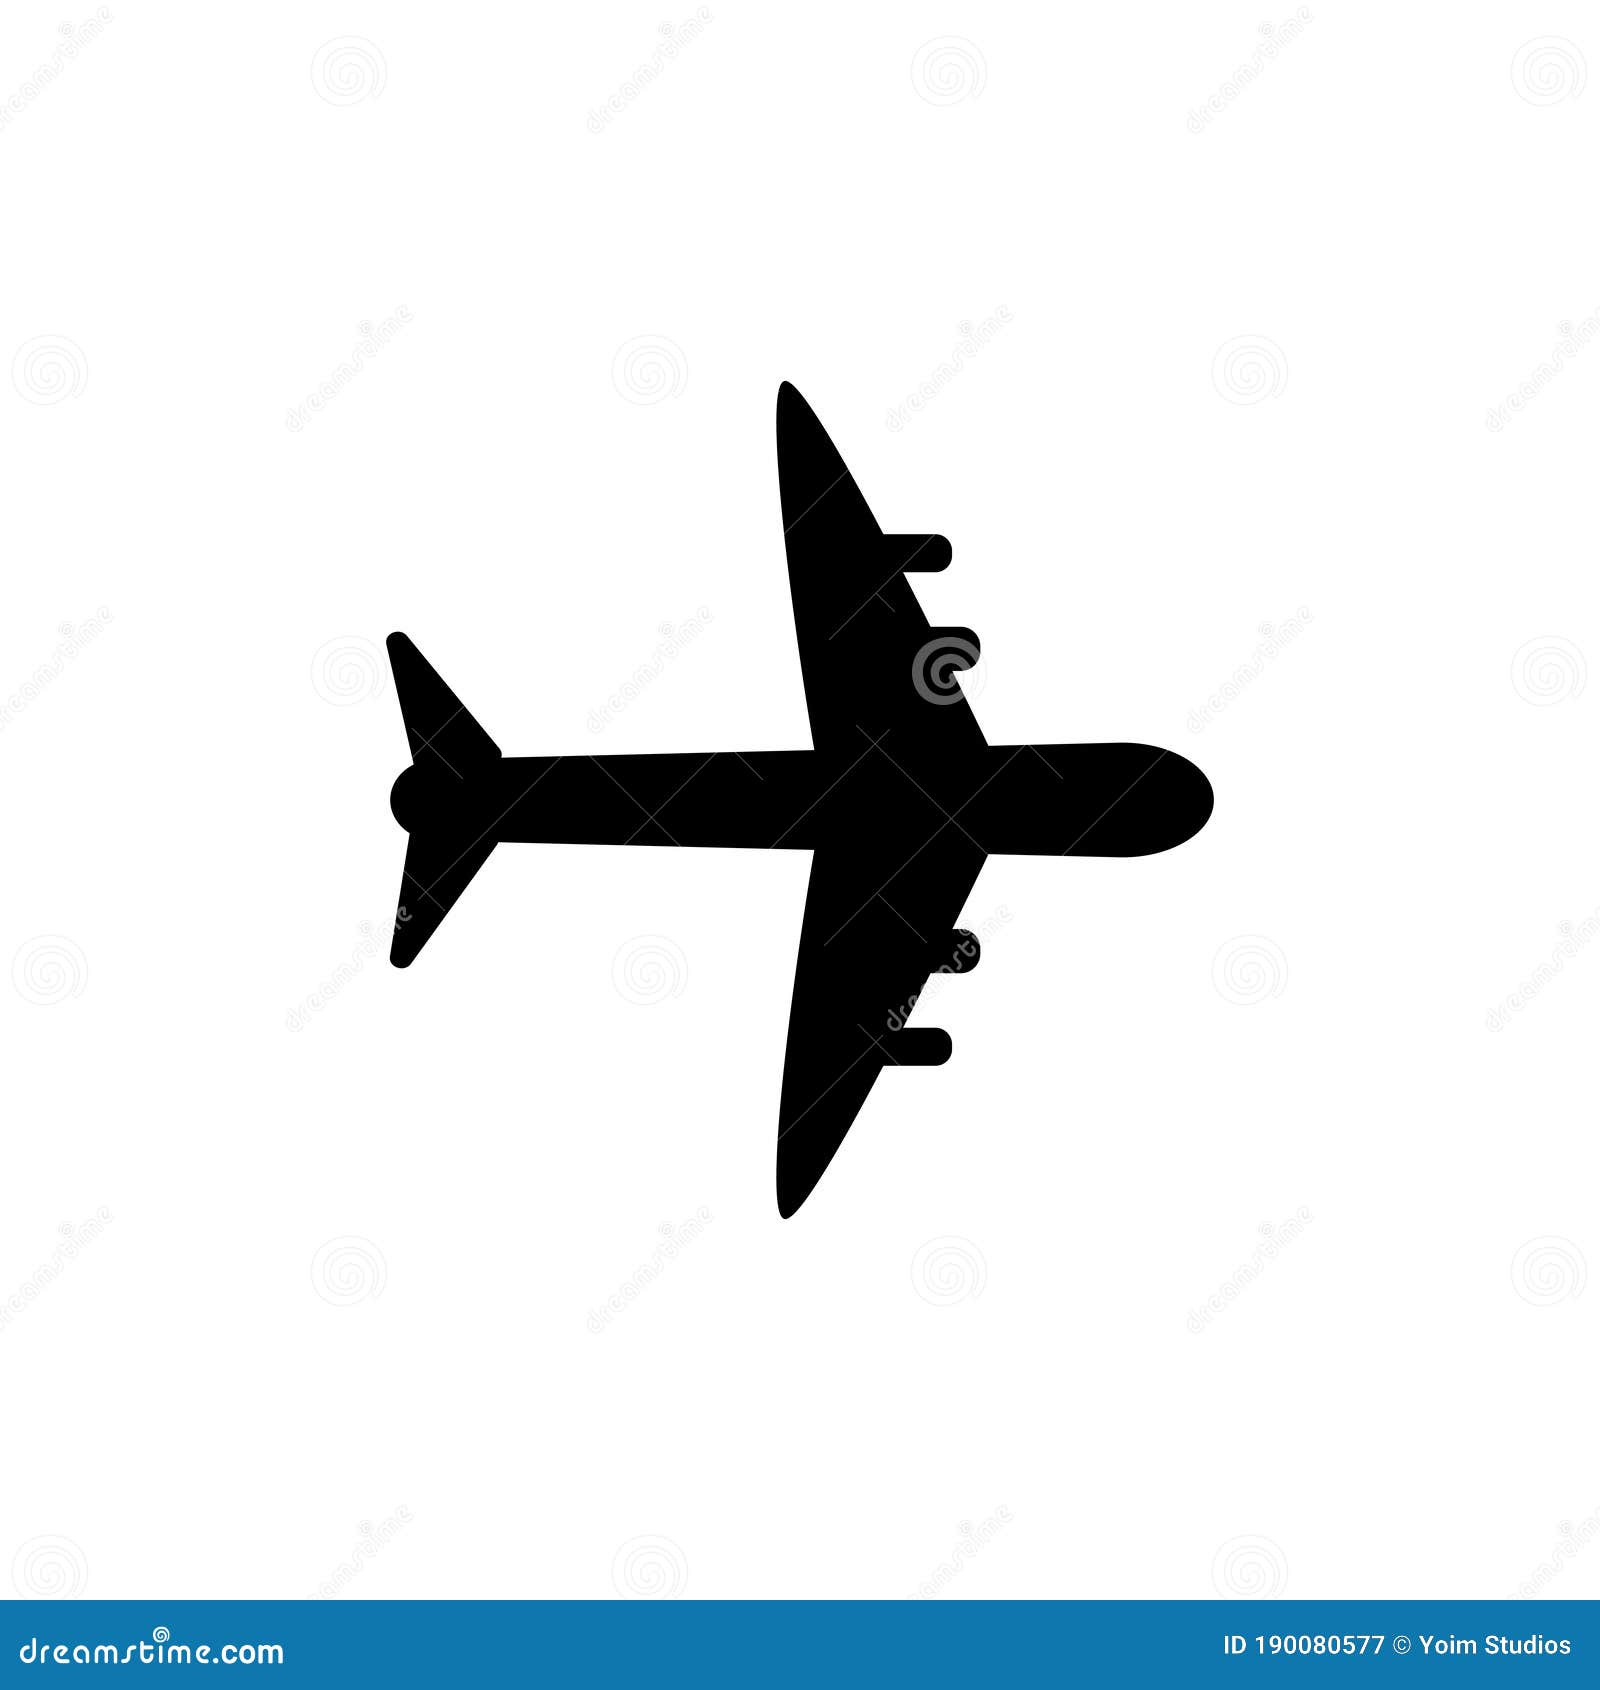 Plane Vector Graphic Design Illustration.icon Logo Design Elements ...